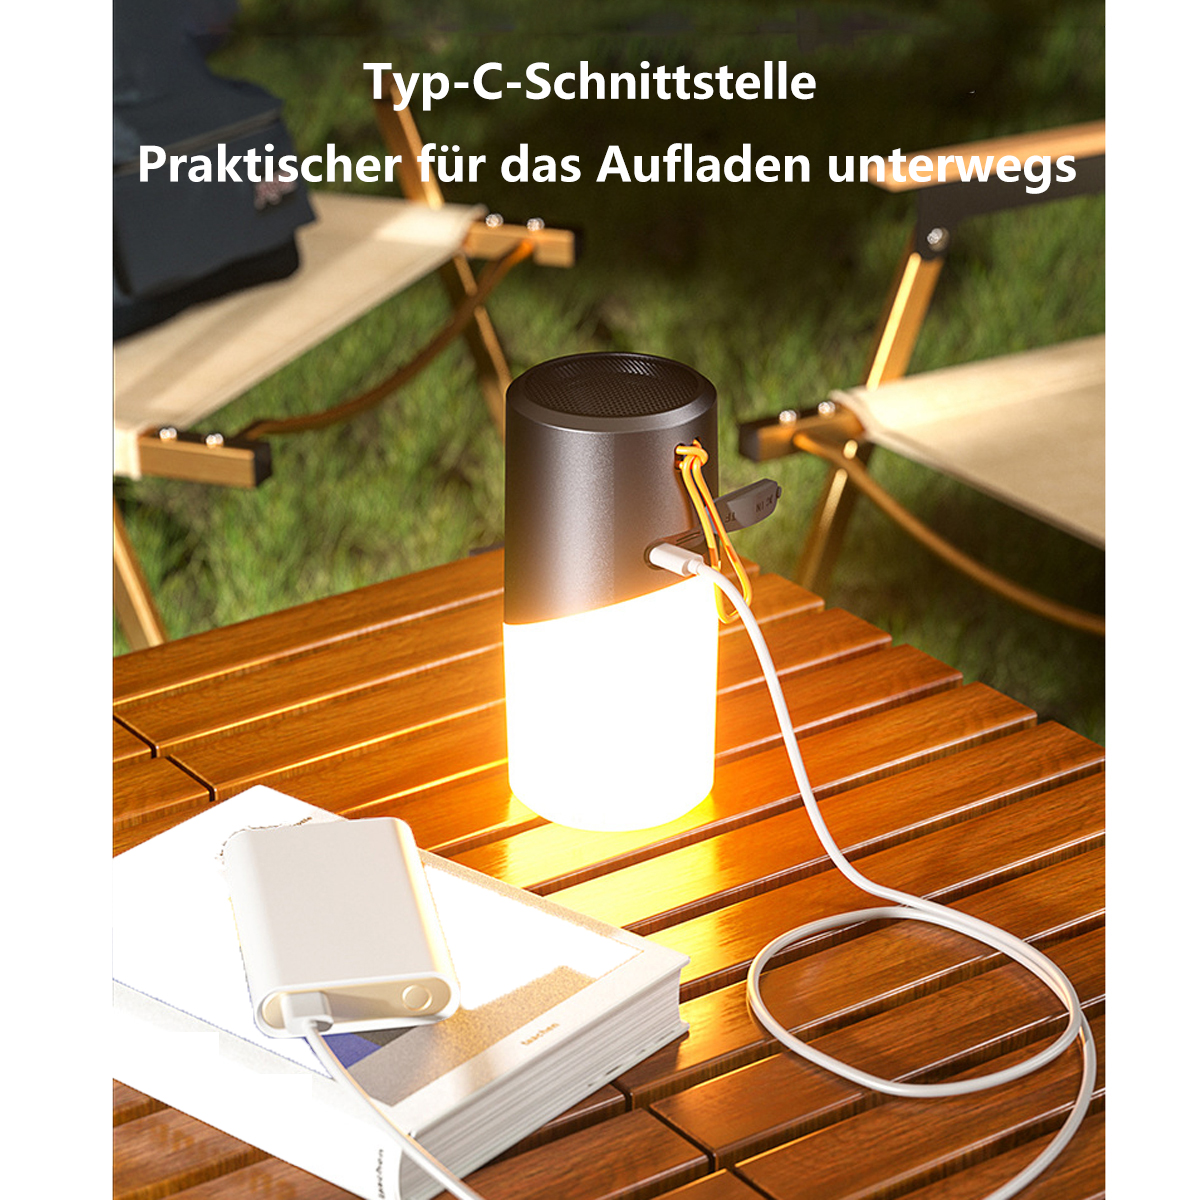 SYNTEK small waterproof Wasserfest Bluetooth-Lautsprecher, Lautsprecher bluetooth speaker light outdoor ambient Weiß, Wireless light audio portable